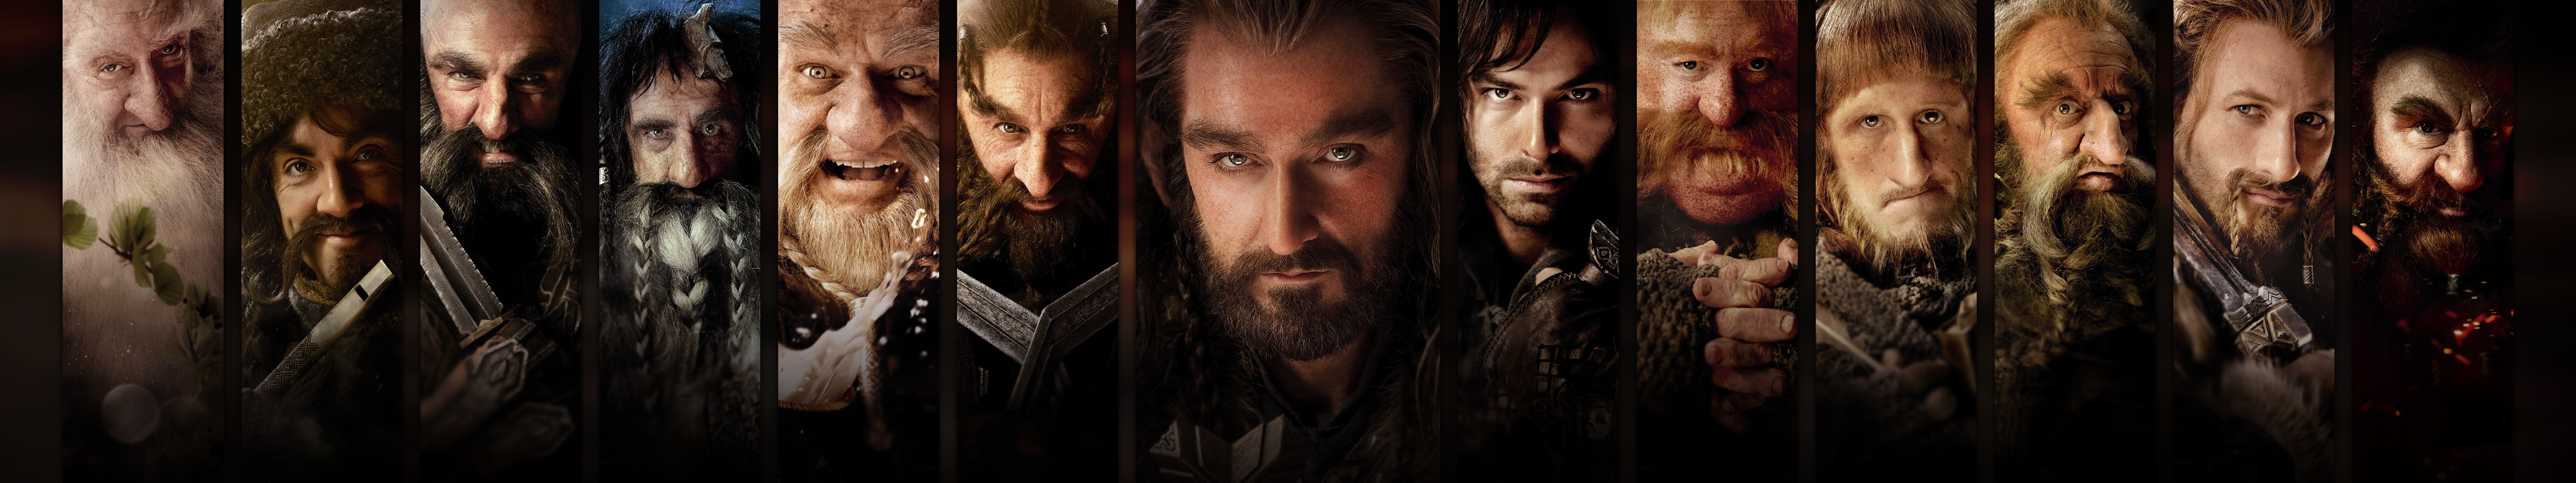 Thorin Oakenshield Panels Dwarfs Movies Collage 5760x1080